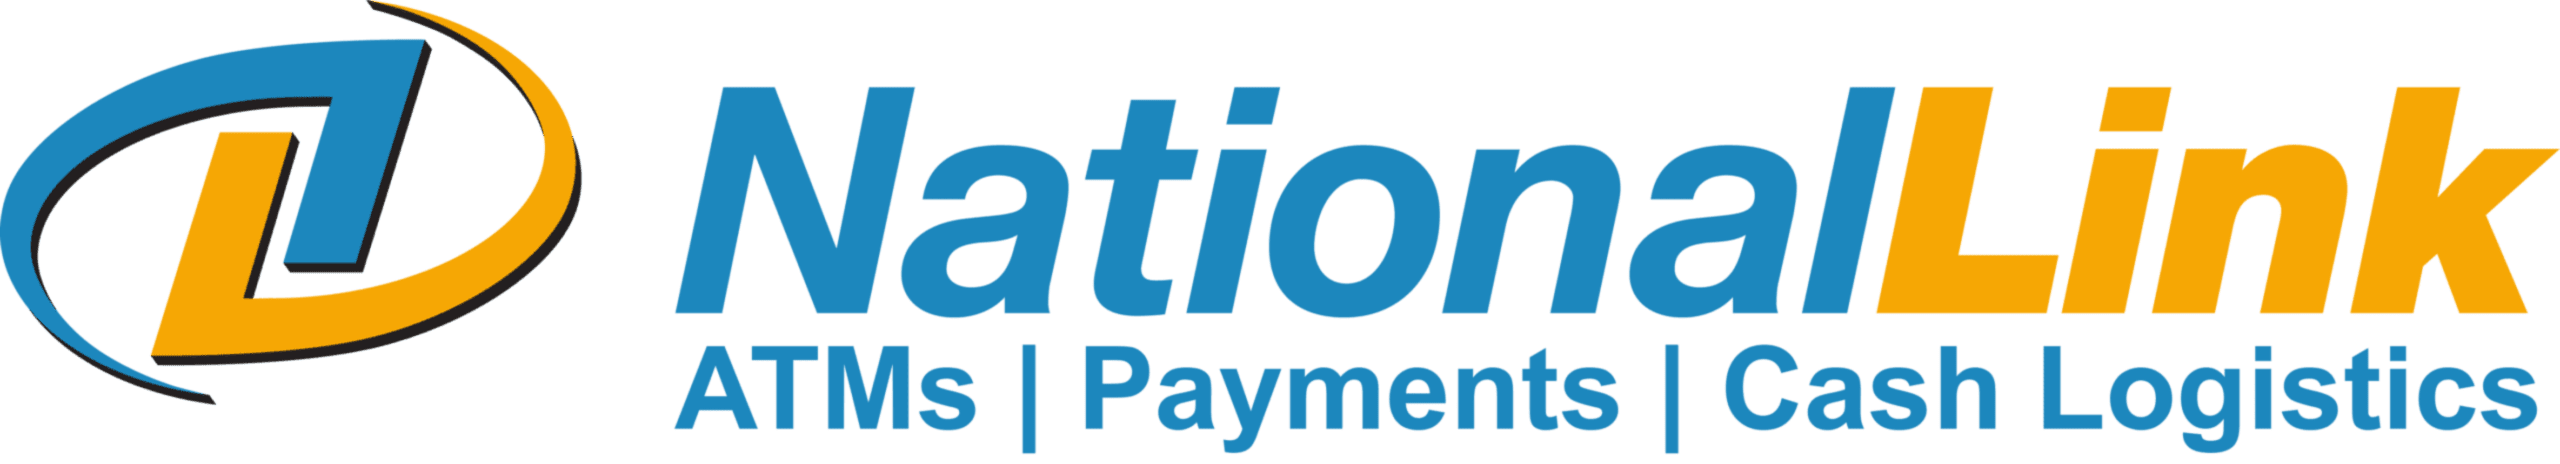 NationalLink, ATMs, Payments, Cash Logistics